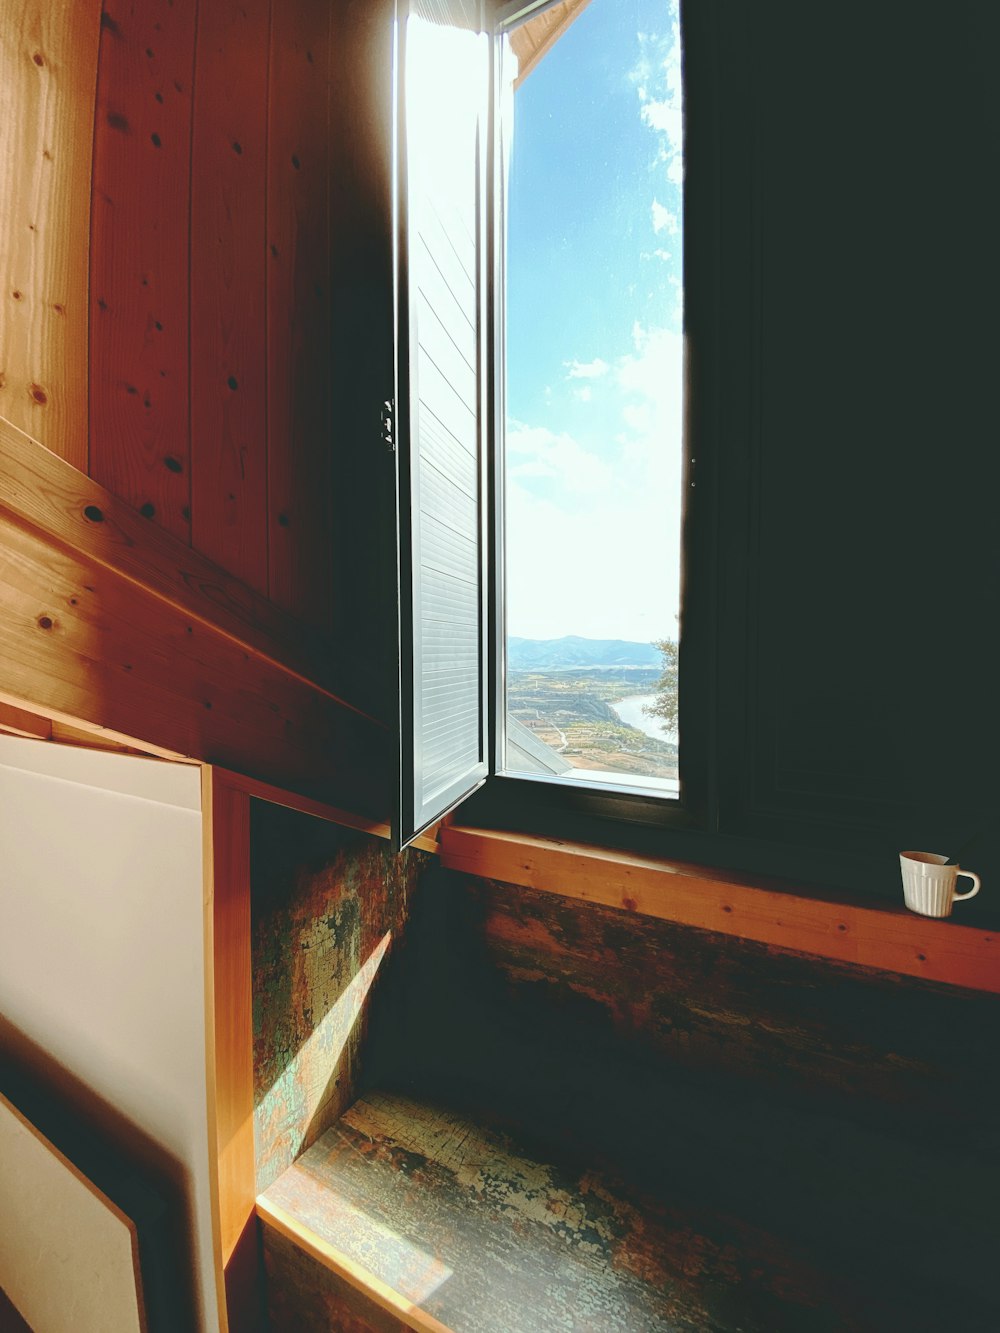 brown wooden cabinet beside window